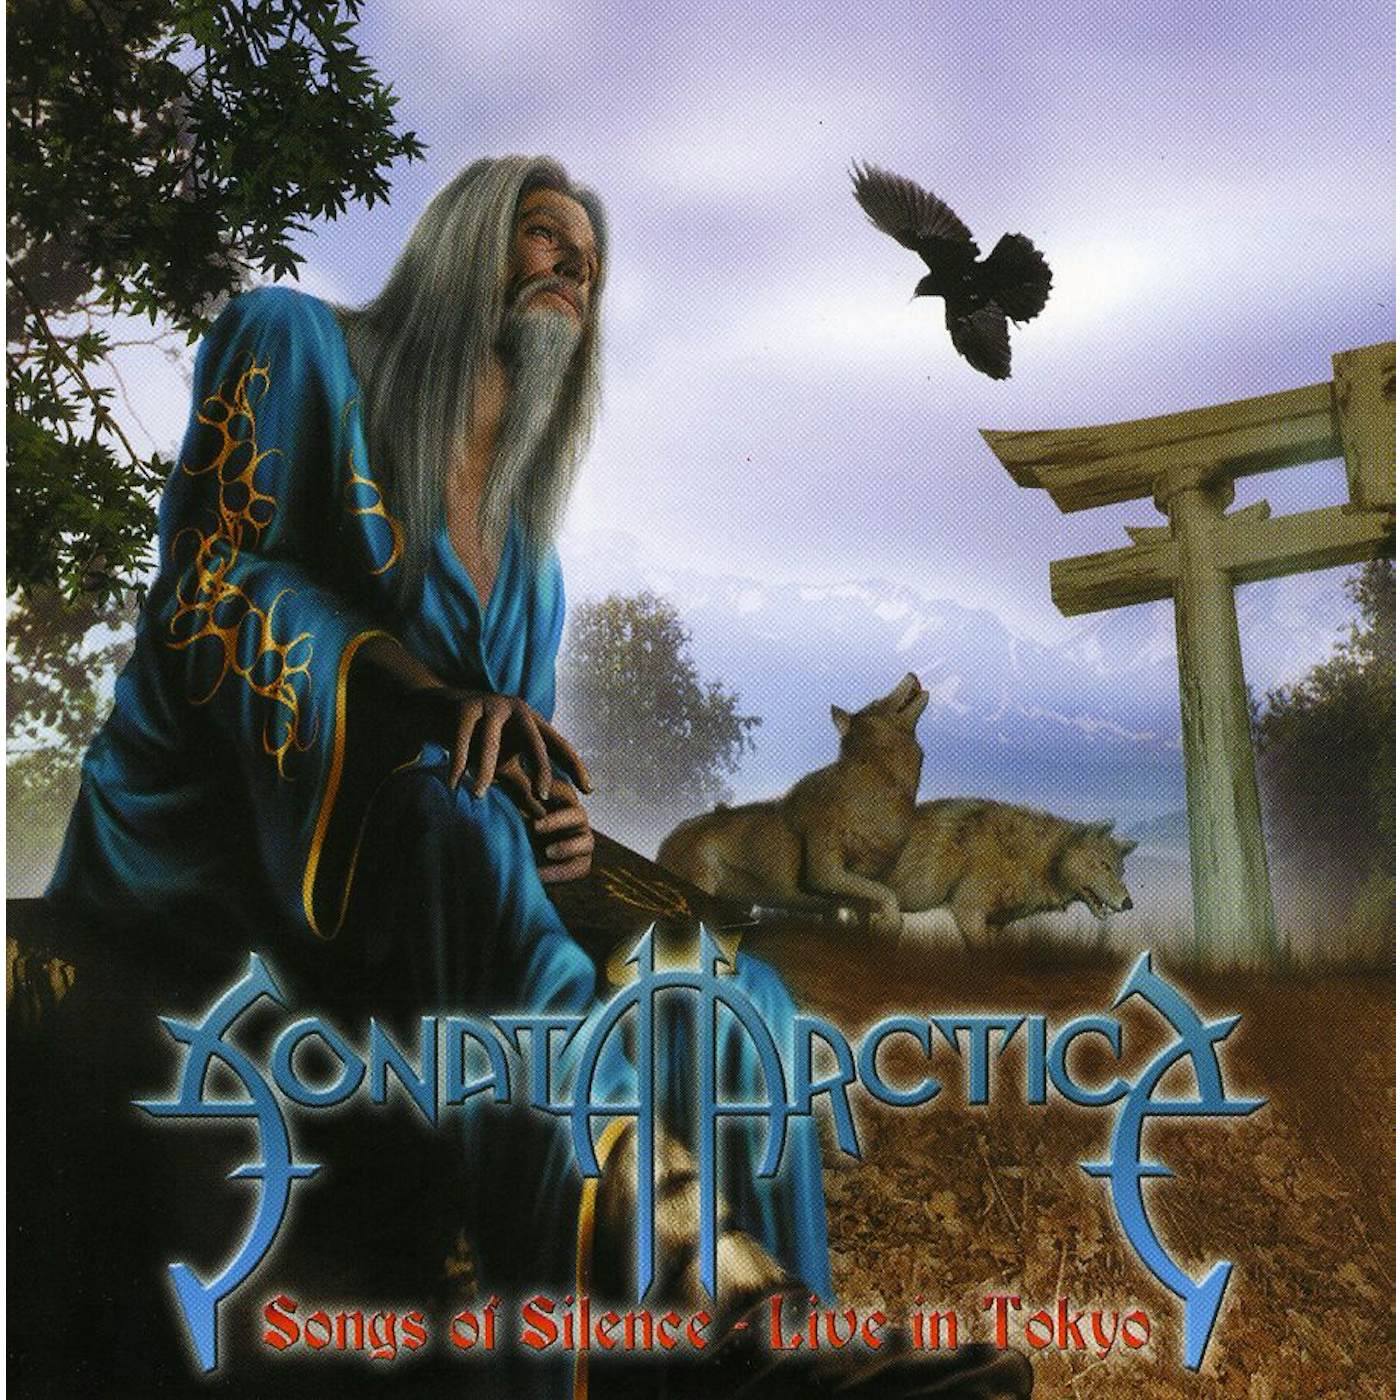 Sonata Arctica SONGS OF SILENCE CD